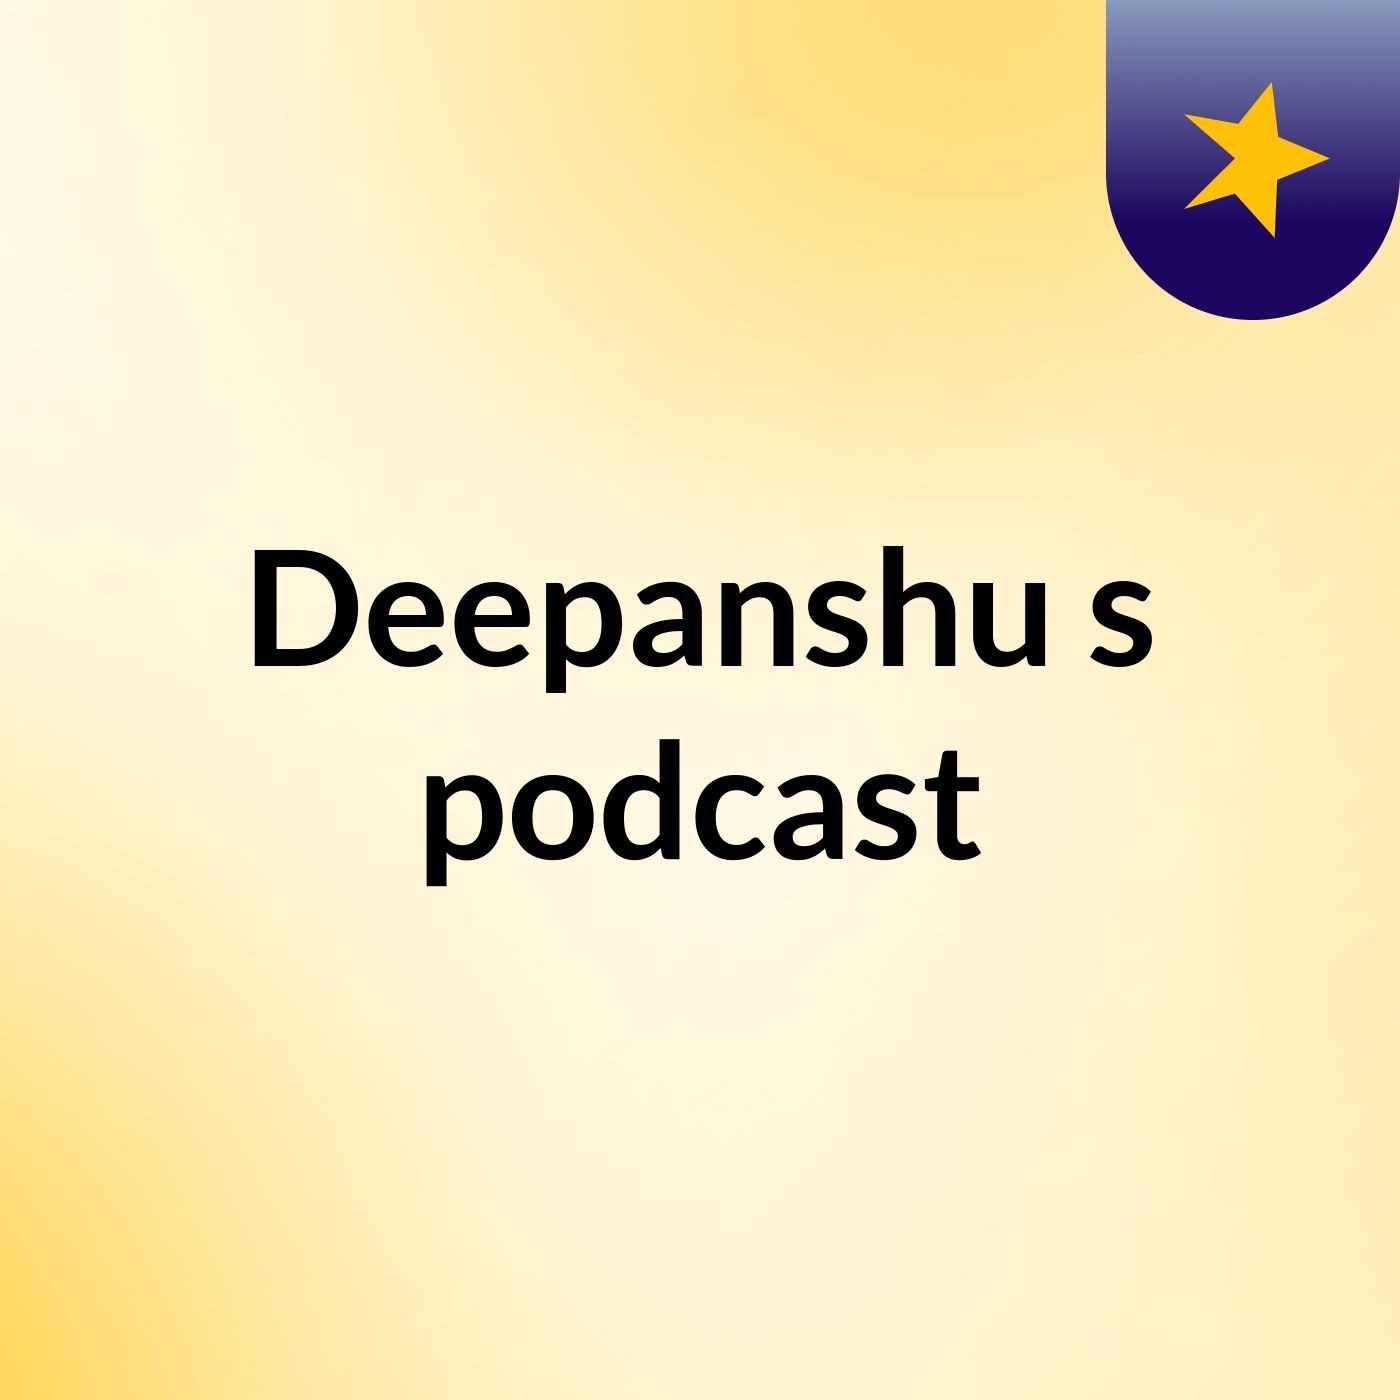 Deepanshu's podcast